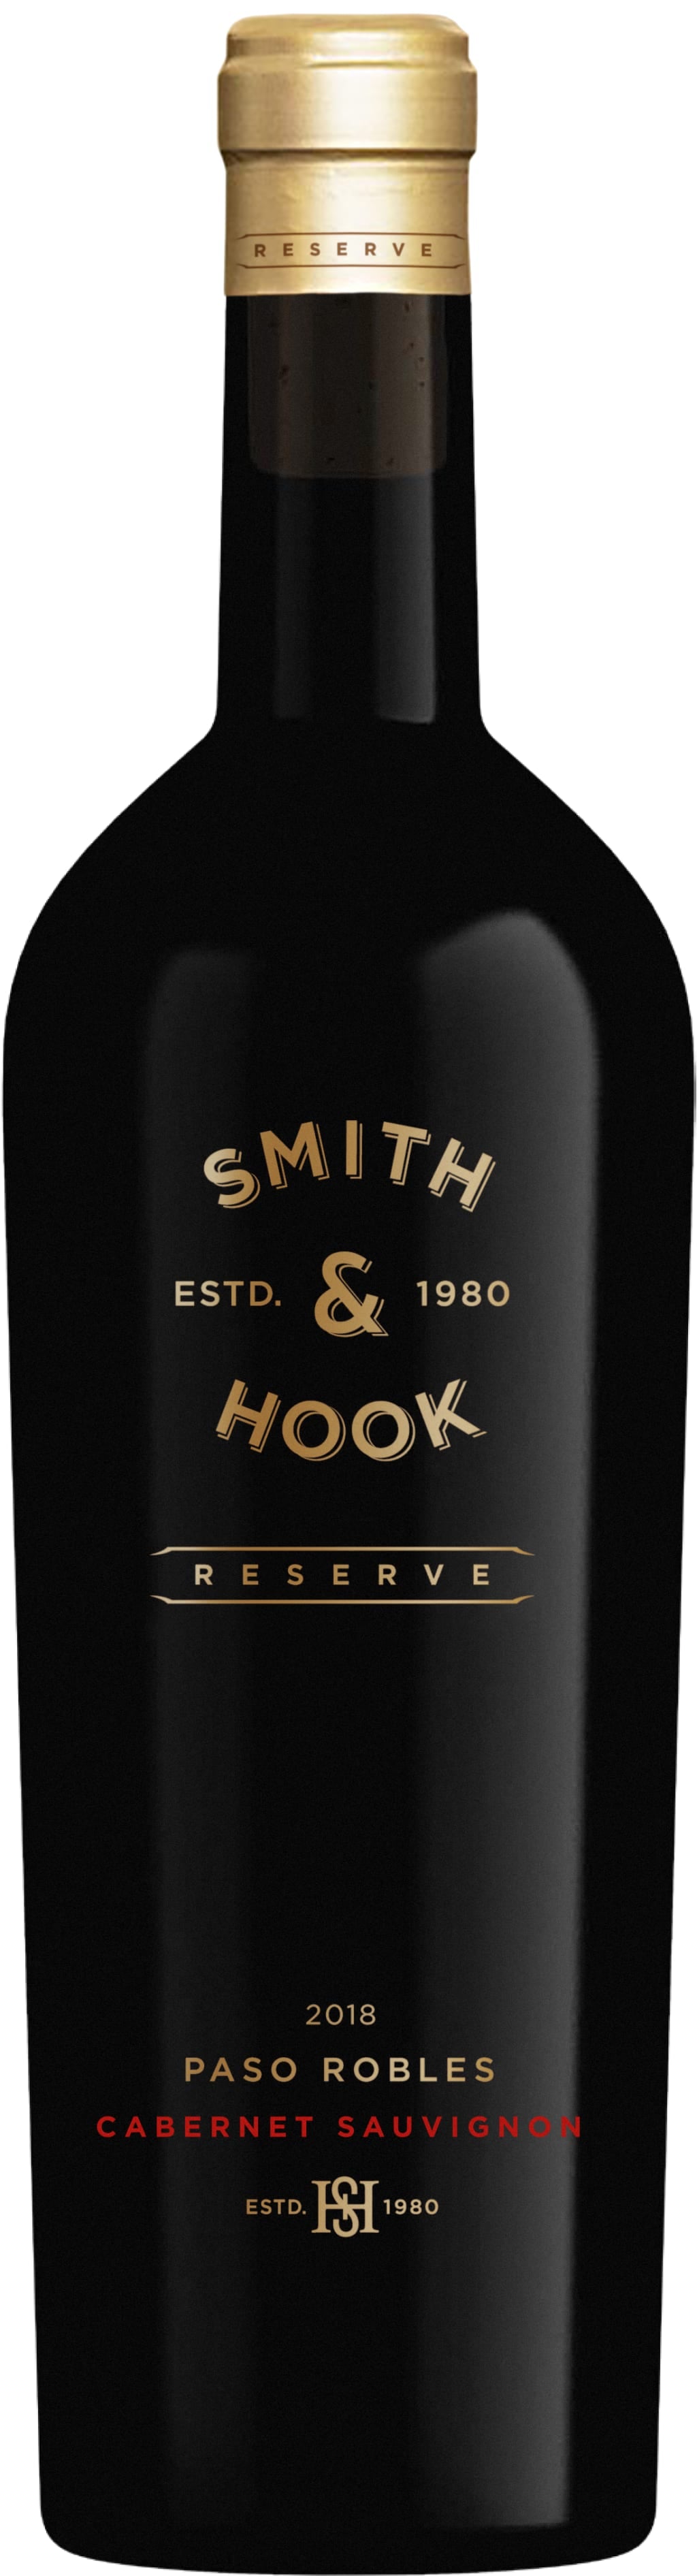 Smith & Hook Cabernet Sauvignon Reserve 2018